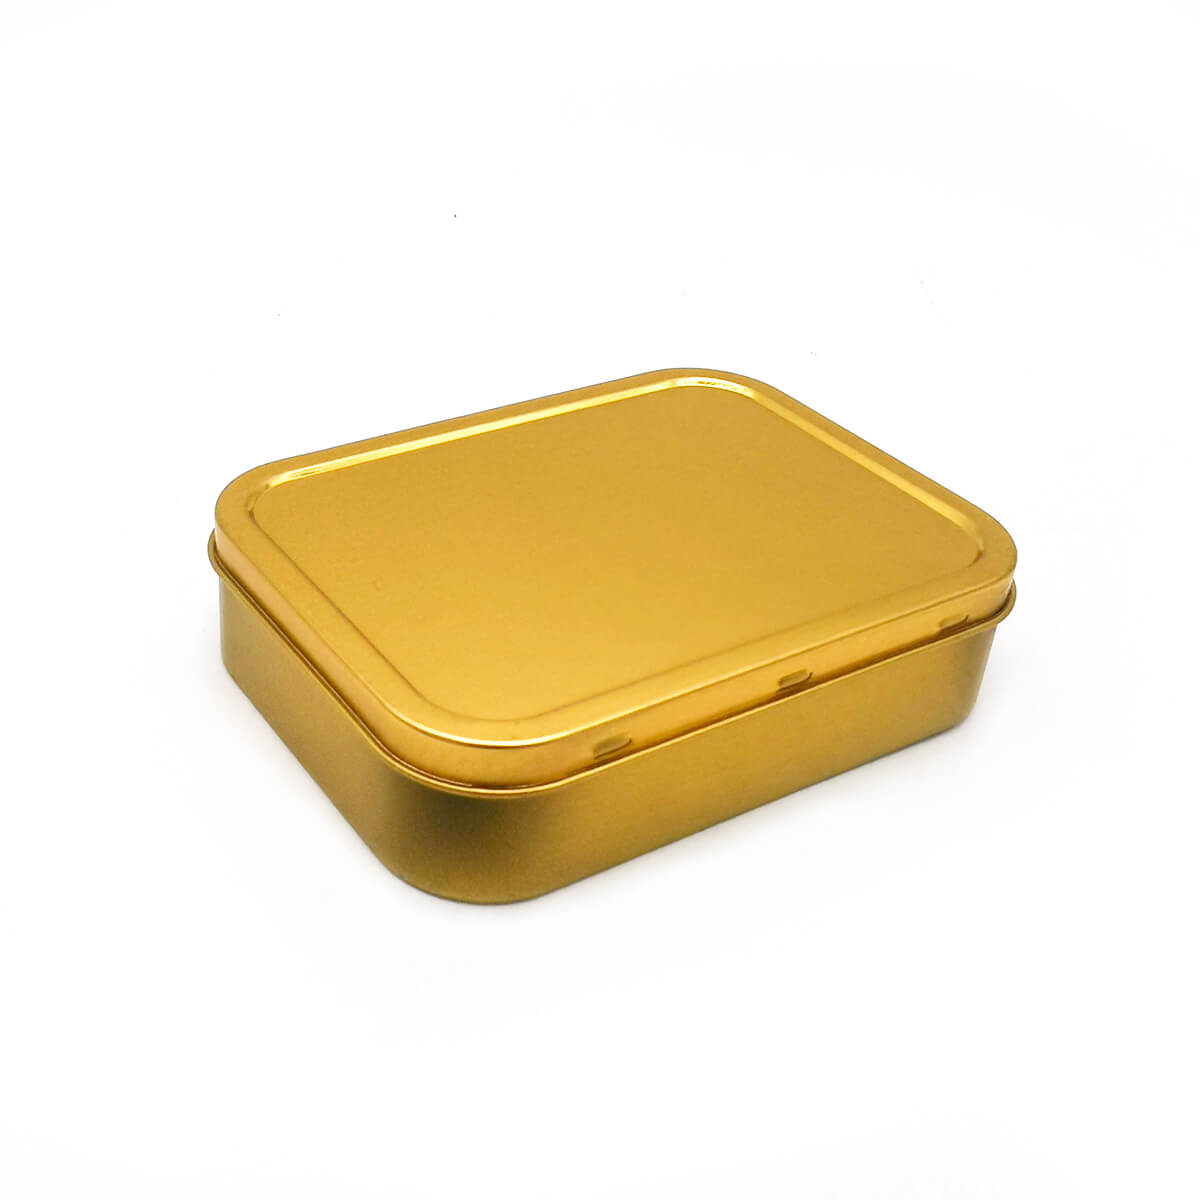 2oz (125ml) Luftdichte Gold & Silber Farbe Tabak Dose Box